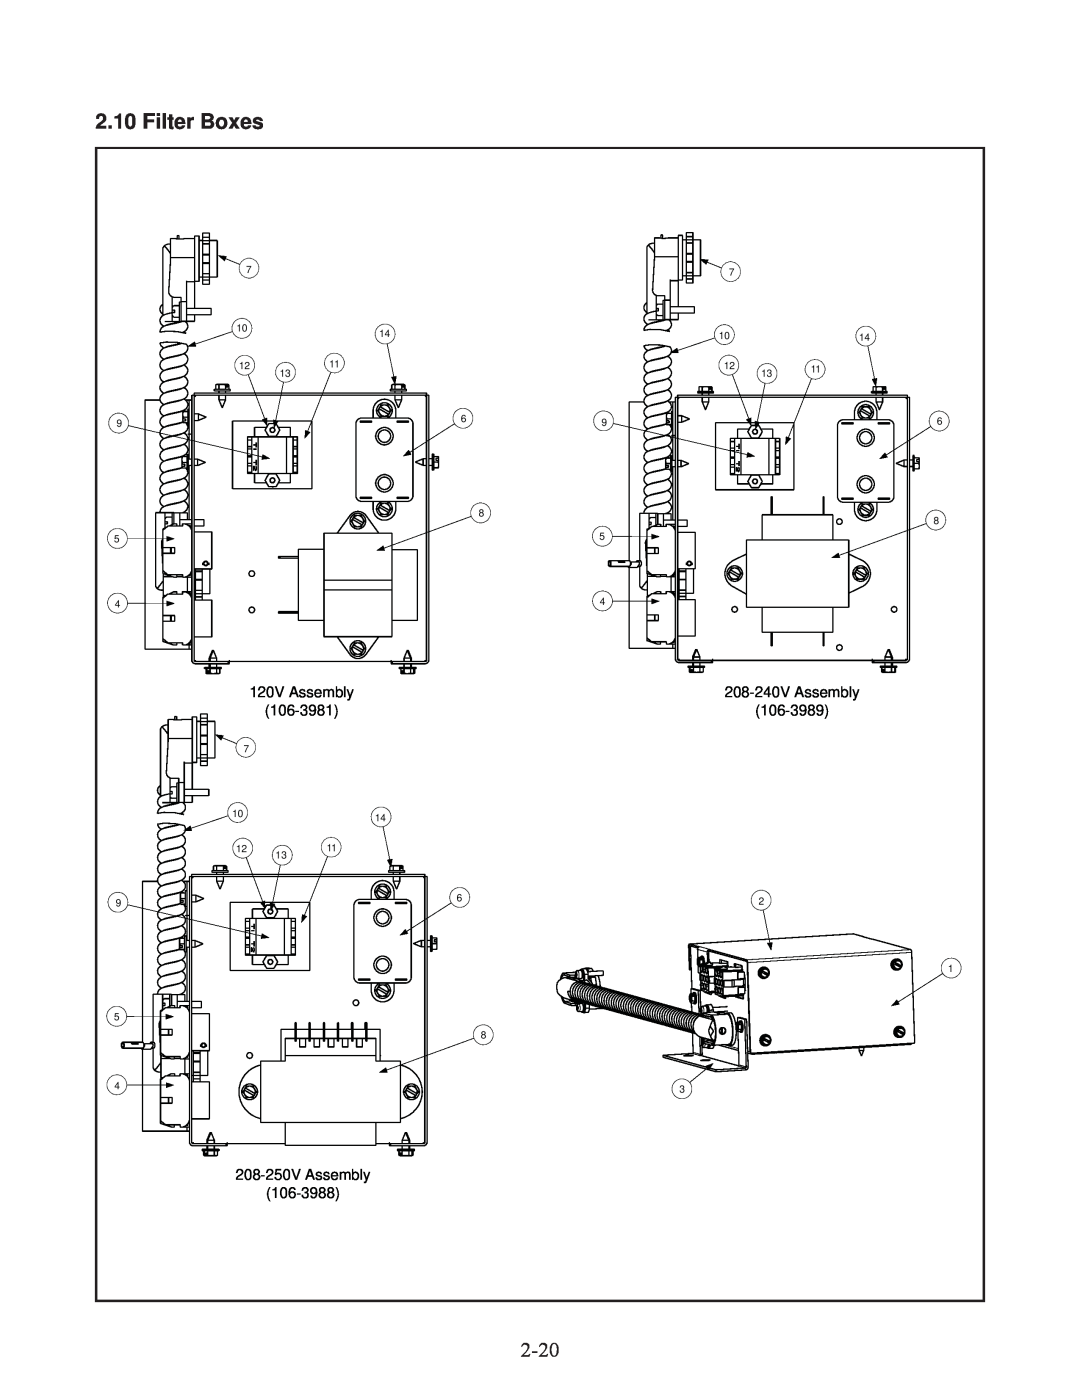 Frymaster 45, 35 manual Filter Boxes, 120V Assembly, 208-240VAssembly, 106-3981, 106-3989, 208-250VAssembly, 1211 